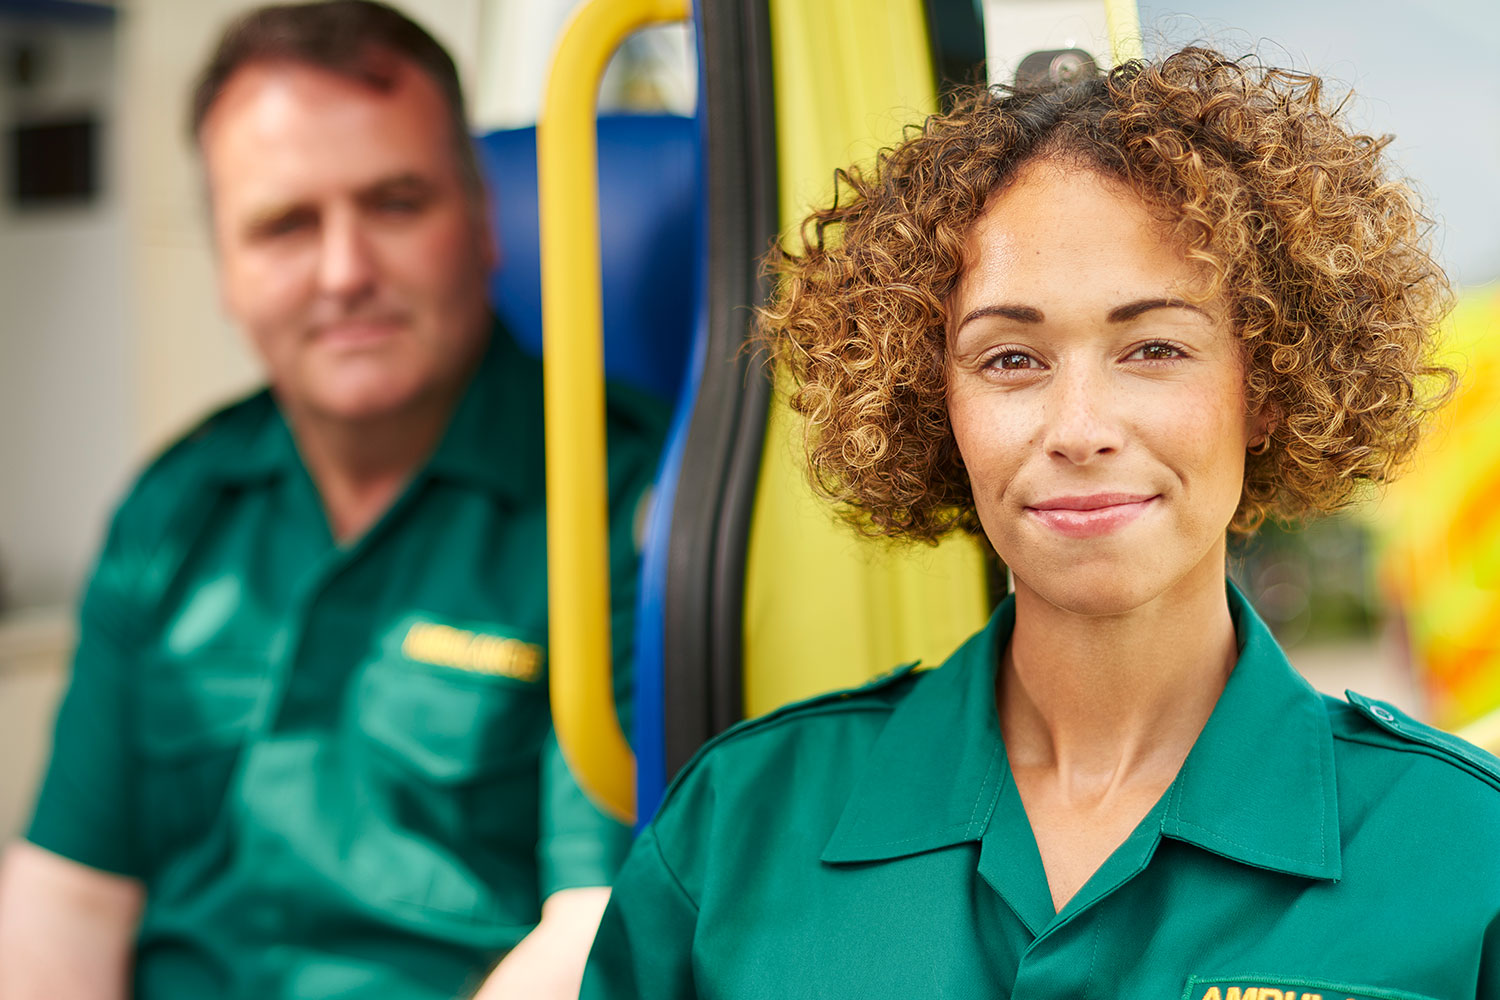 South East Coast Ambulance Service improves HR efficiency